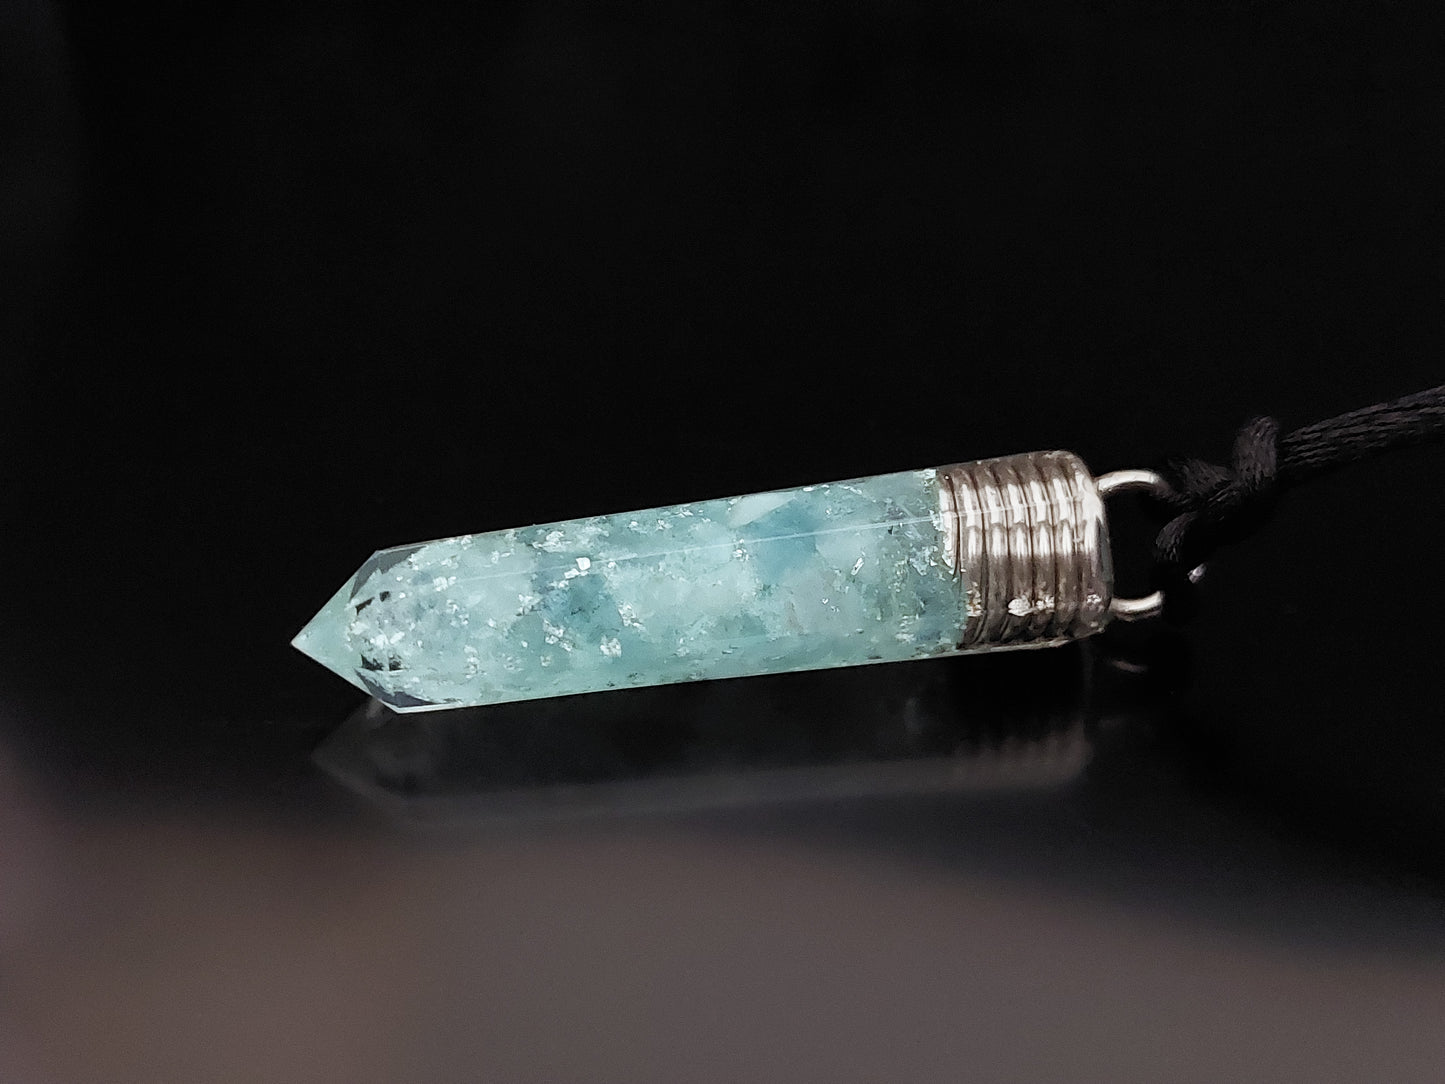 Aquamarine Orgone Orgonite pendant necklace, Reiki infused crystal chakra healing amulet, glow in dark